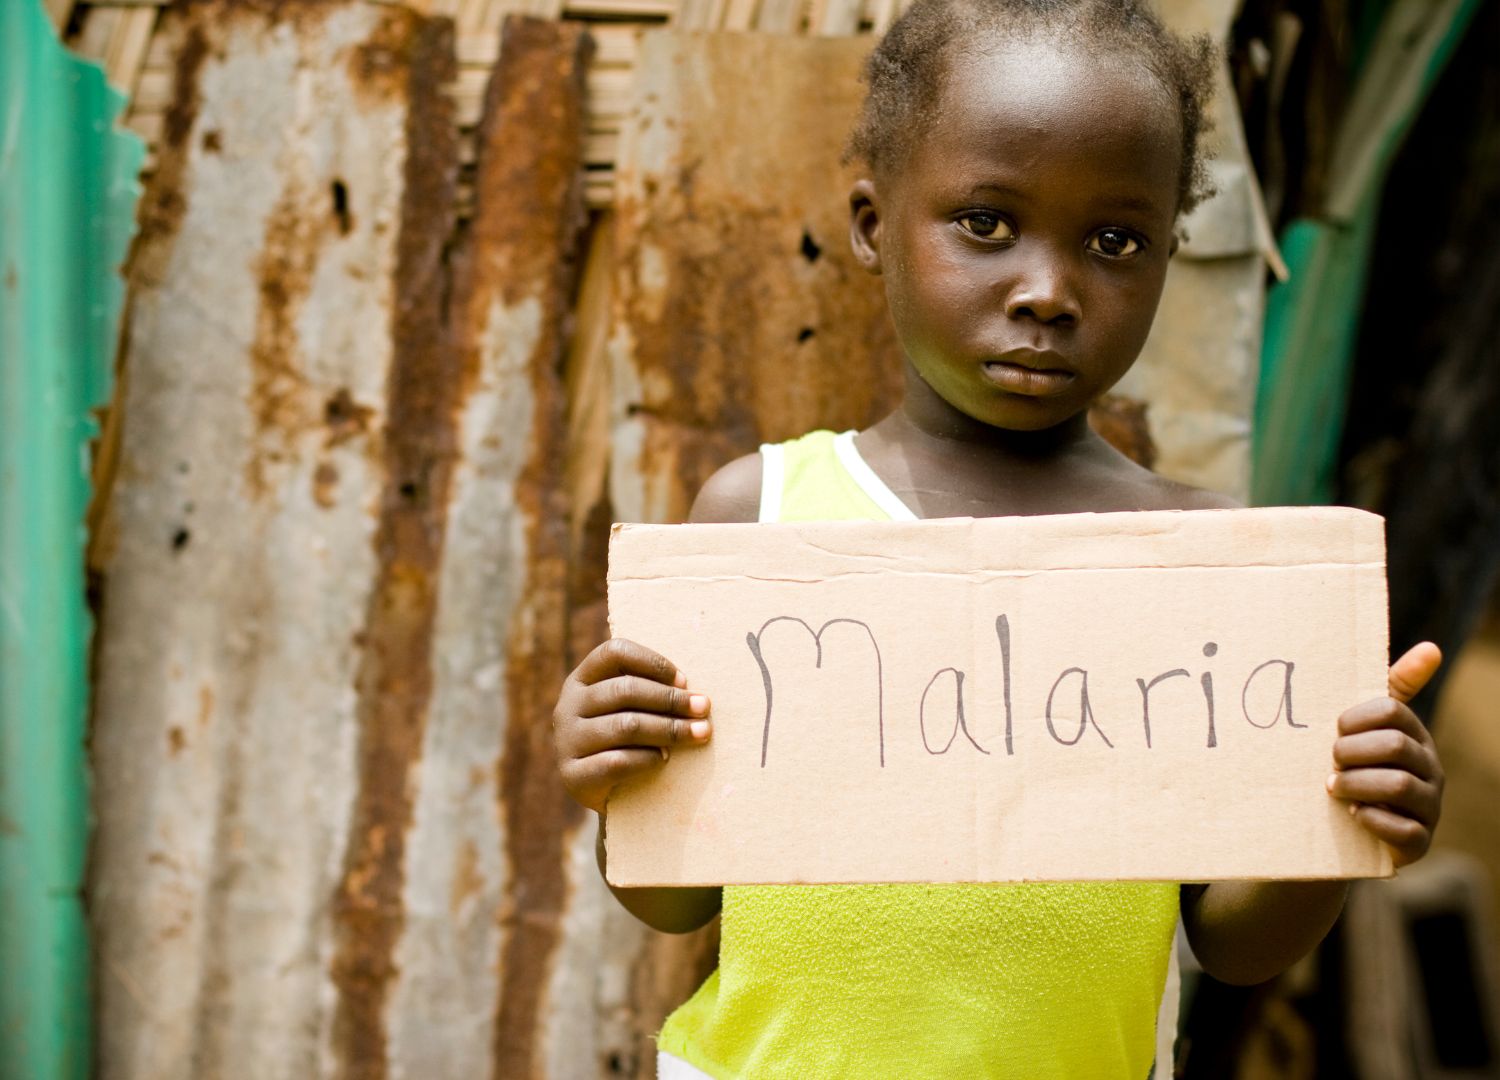 Curbing the burden of malaria in children (sponsored)